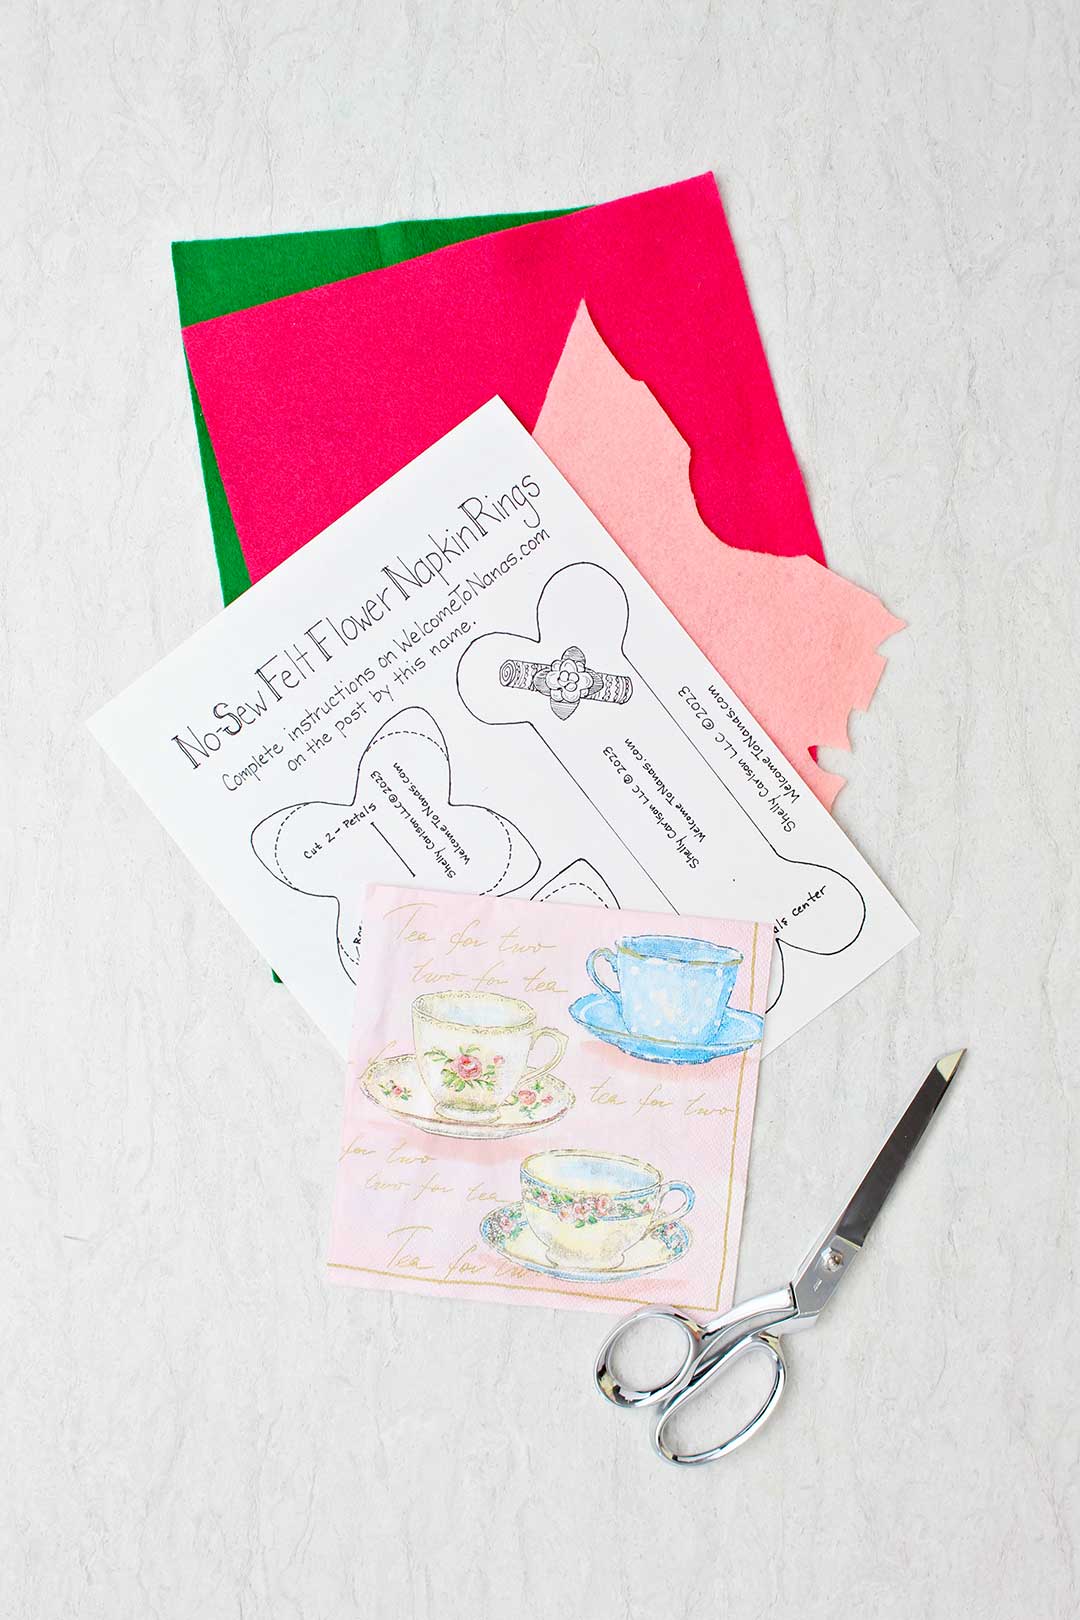 Green, dark pink and light pink felt, paper pattern, teacup napkin and scissors.